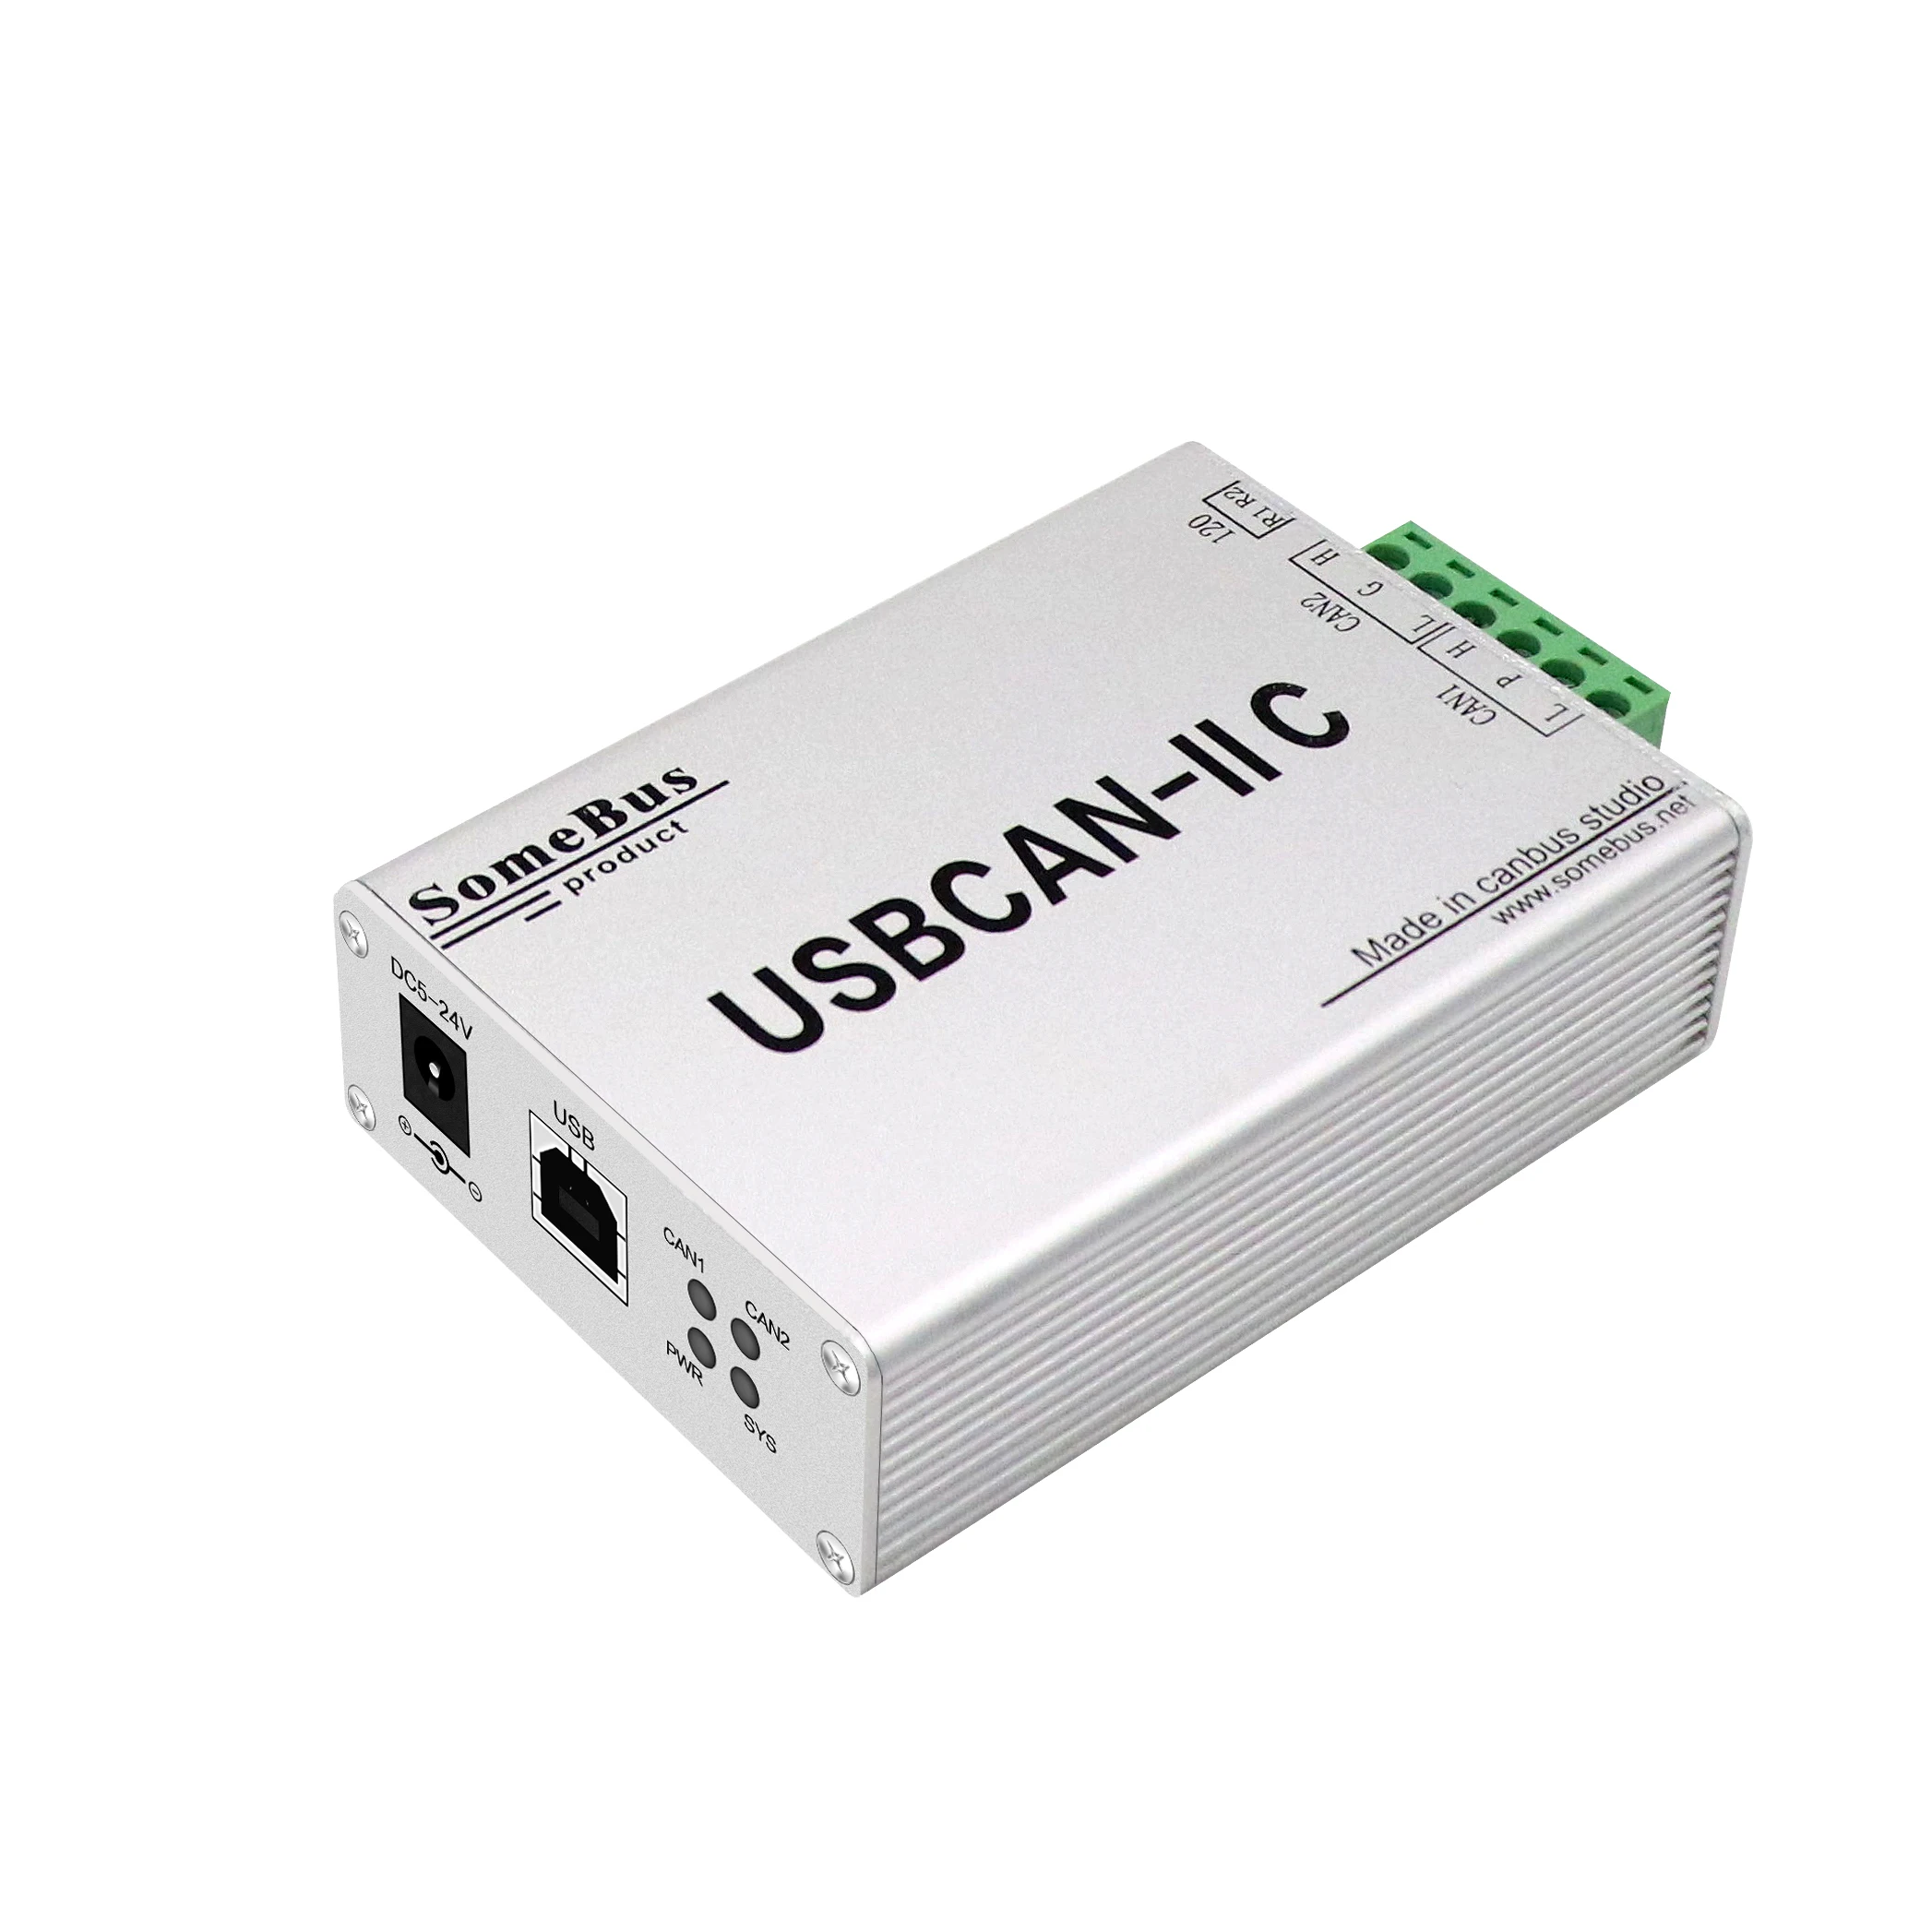 GCAN USB CAN Bus Signal through The DataBridge Modulation or Storage Device Data Adaptation Analyzer